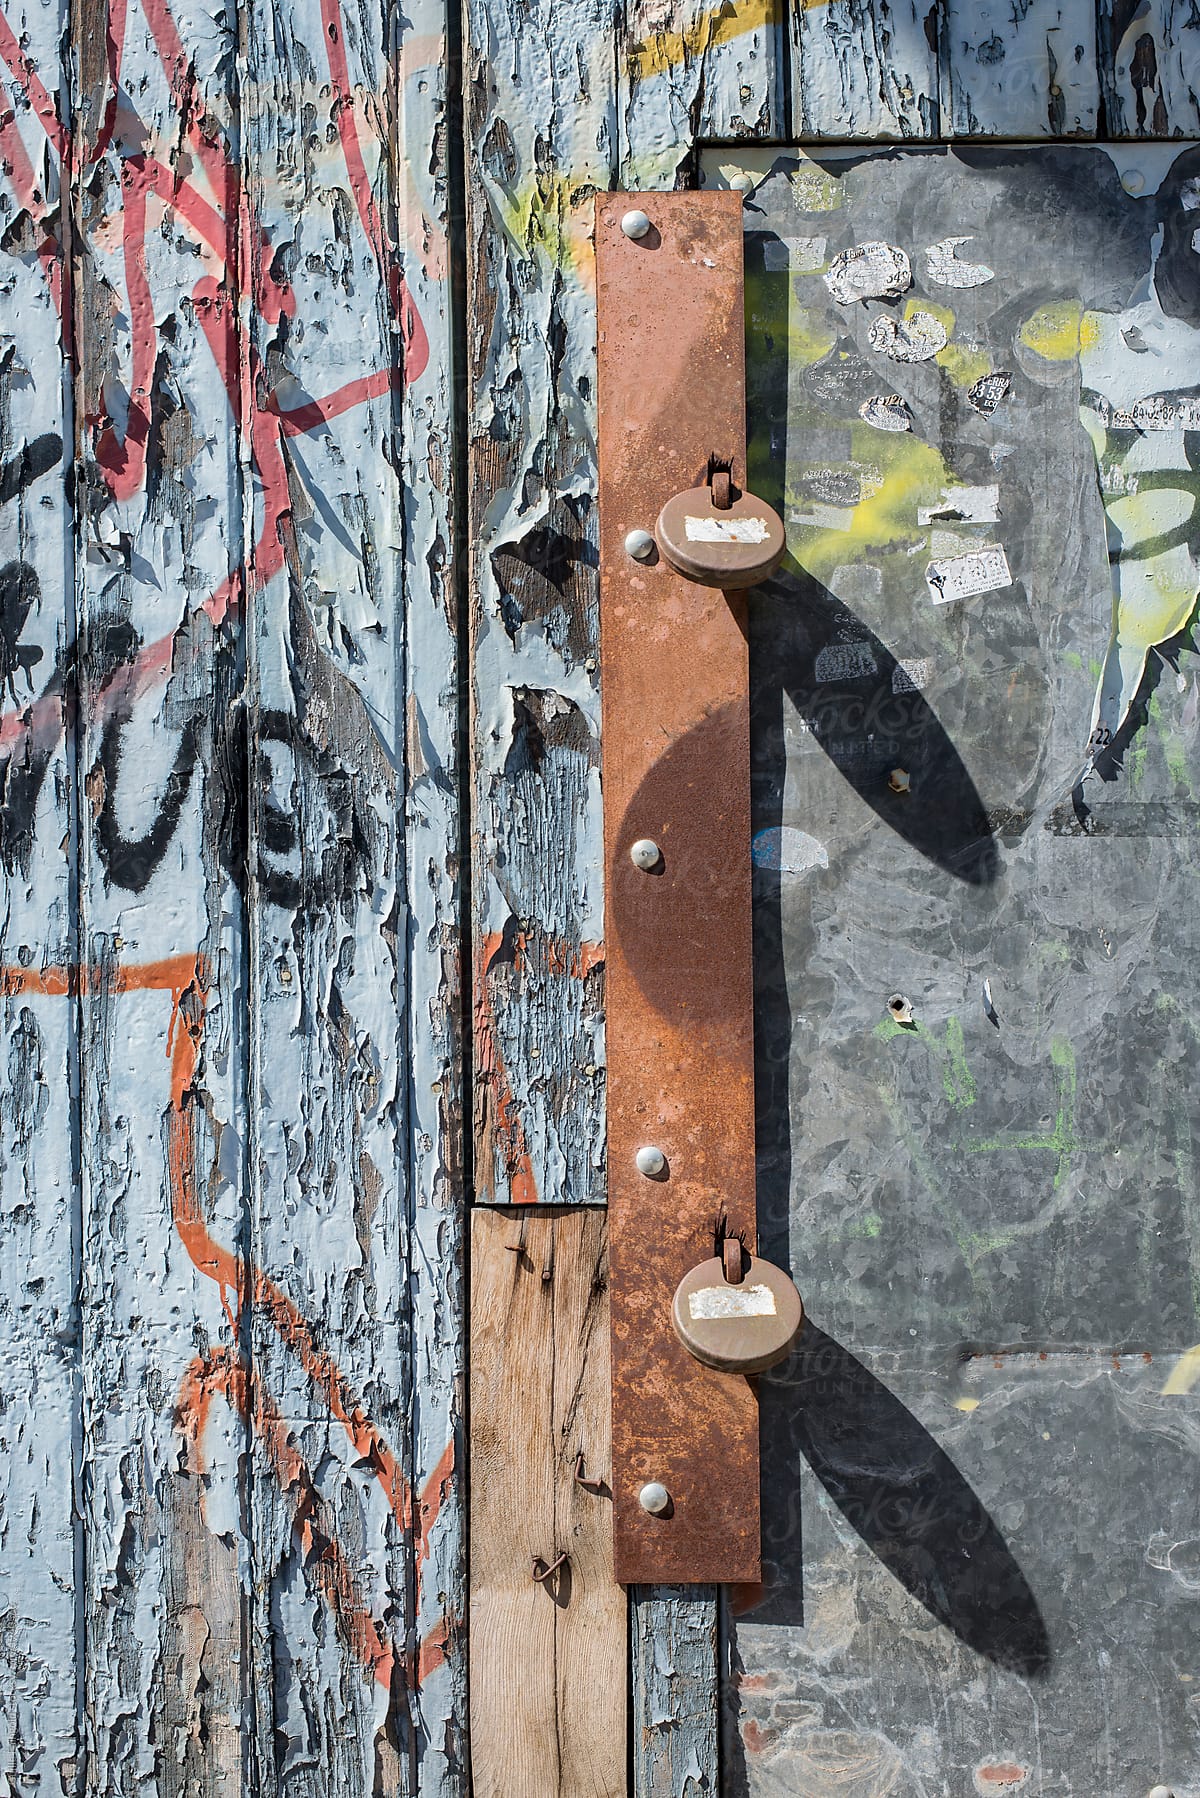 Rusty padlocks in shabby wooden wall